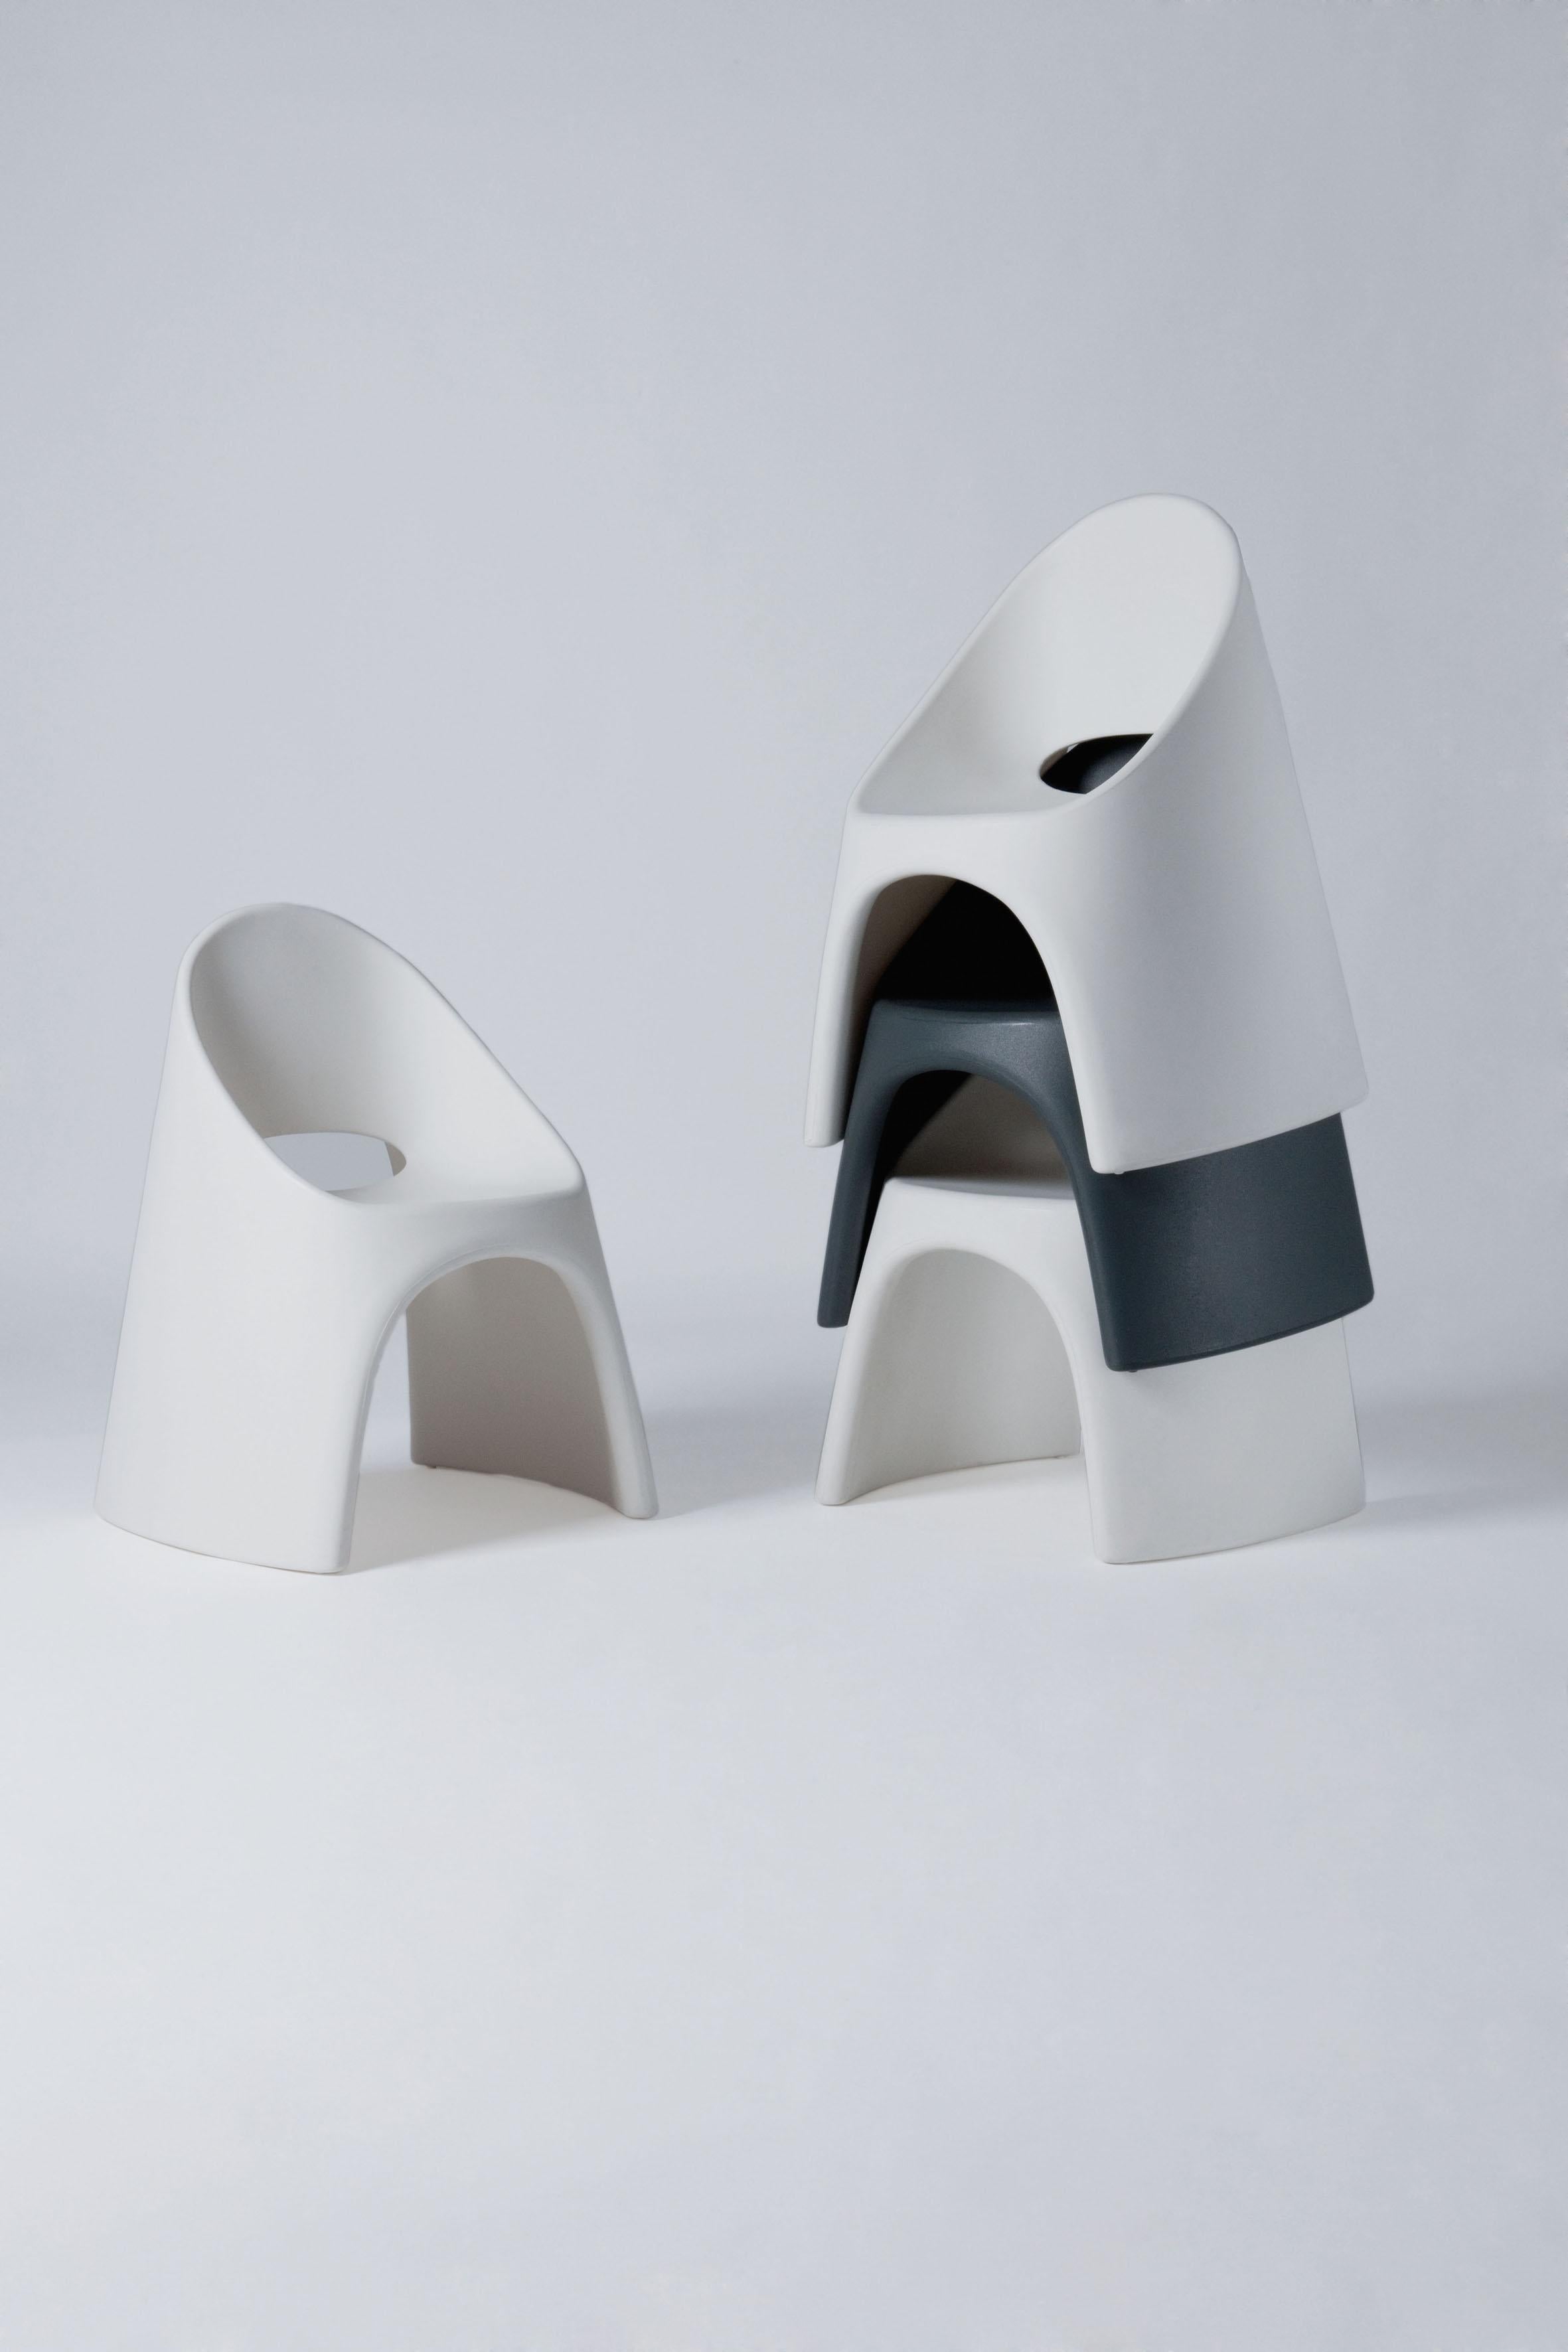 Italian Slide Design Amélie Chair in Malva Green by Italo Pertichini For Sale